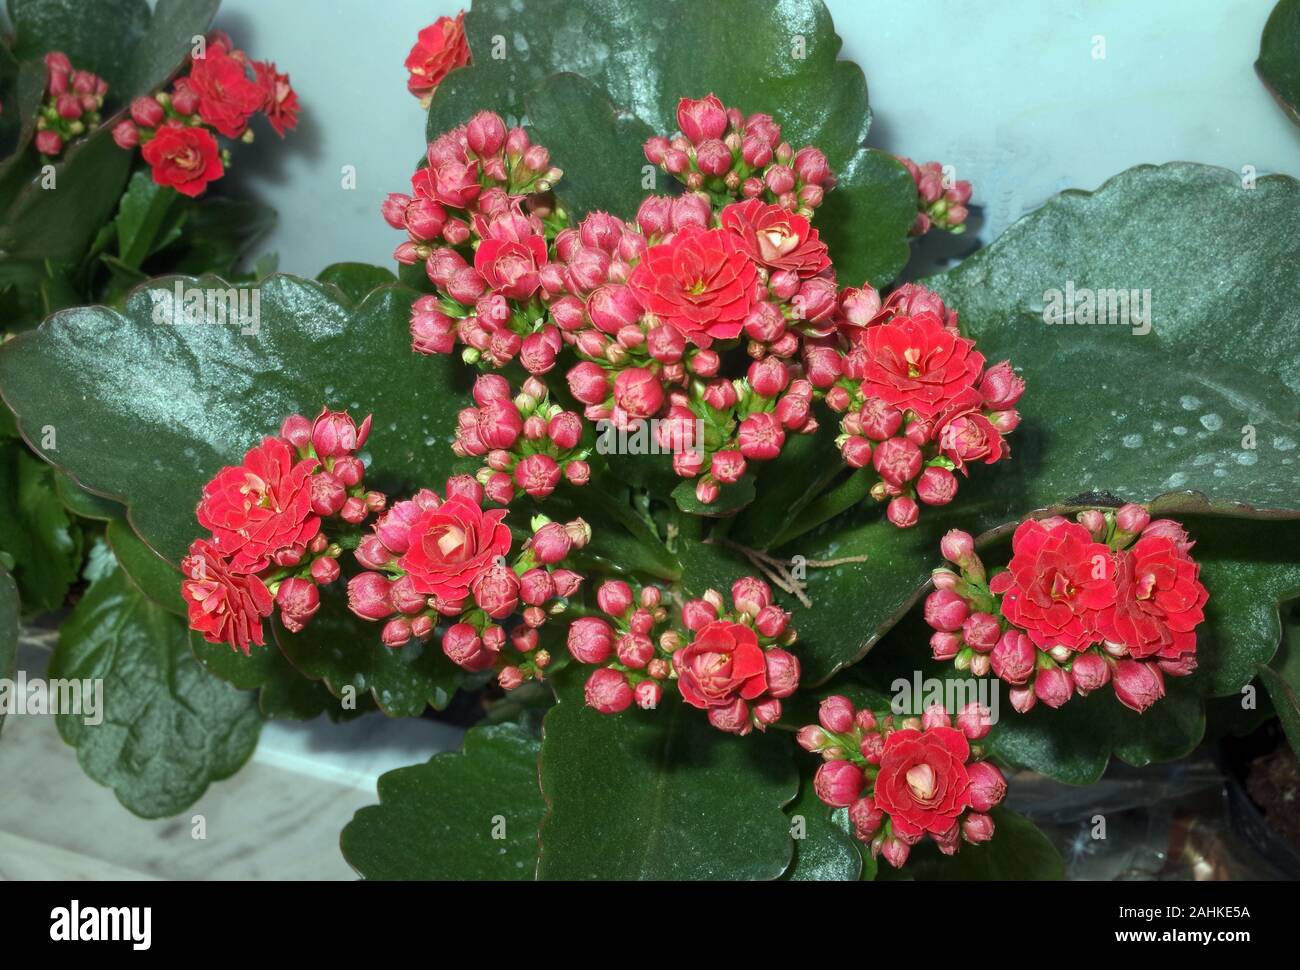 Calandiva blooming close-up Stock Photo